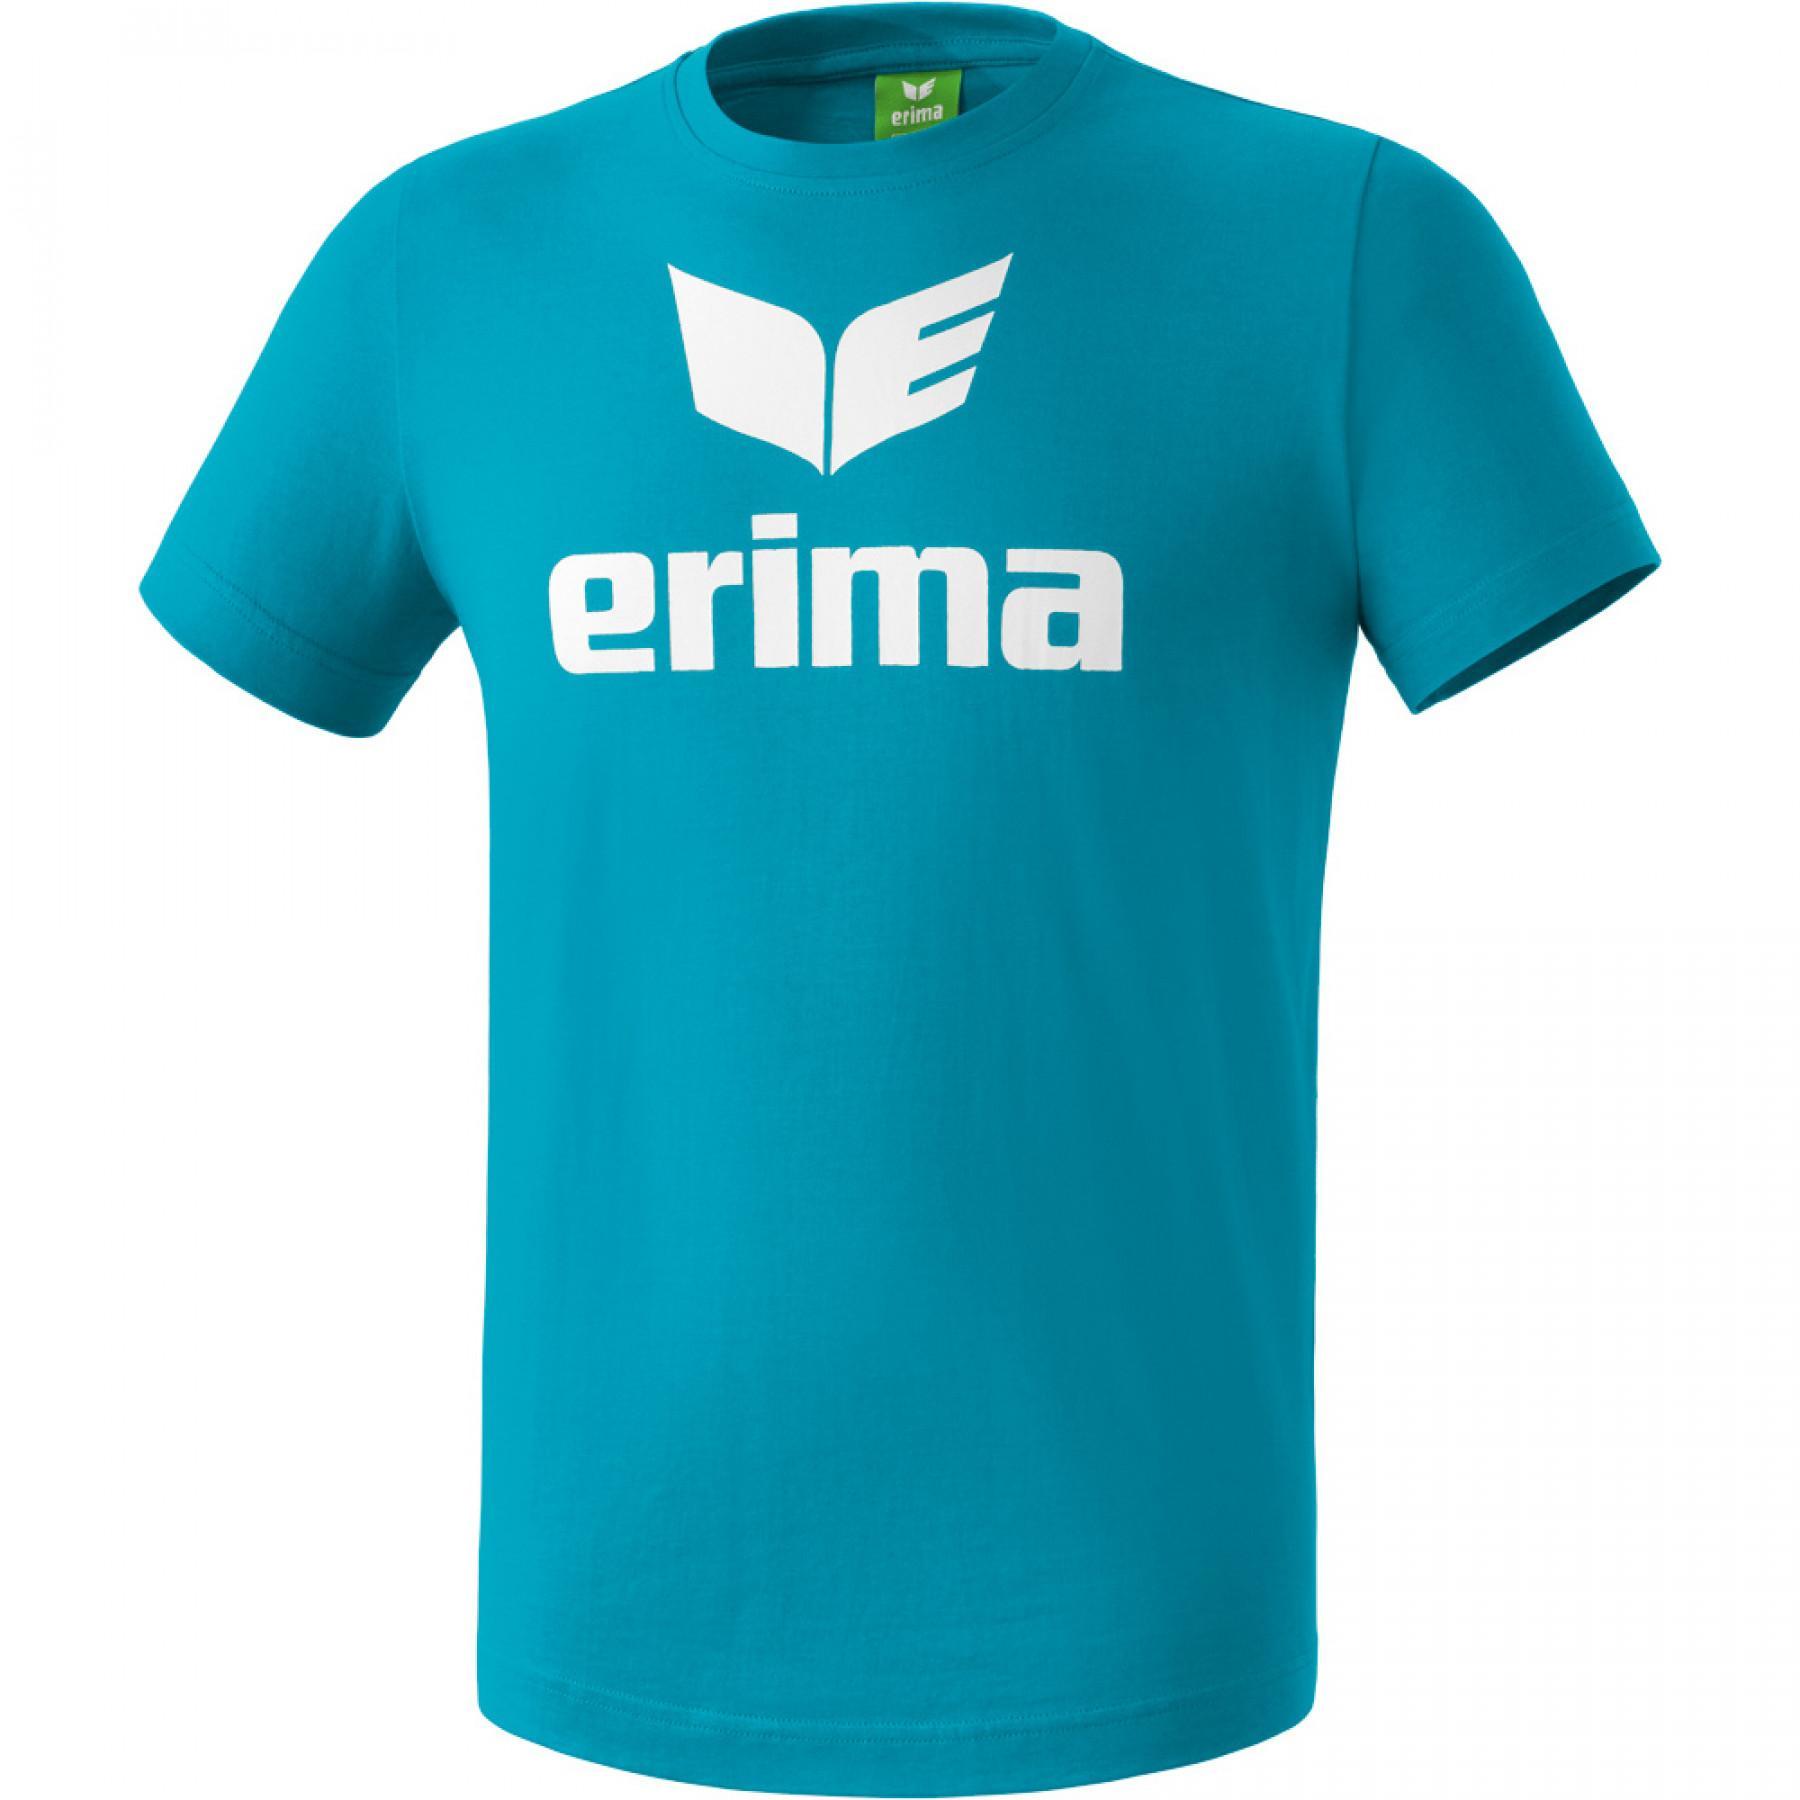 Koszulka Erima Promo